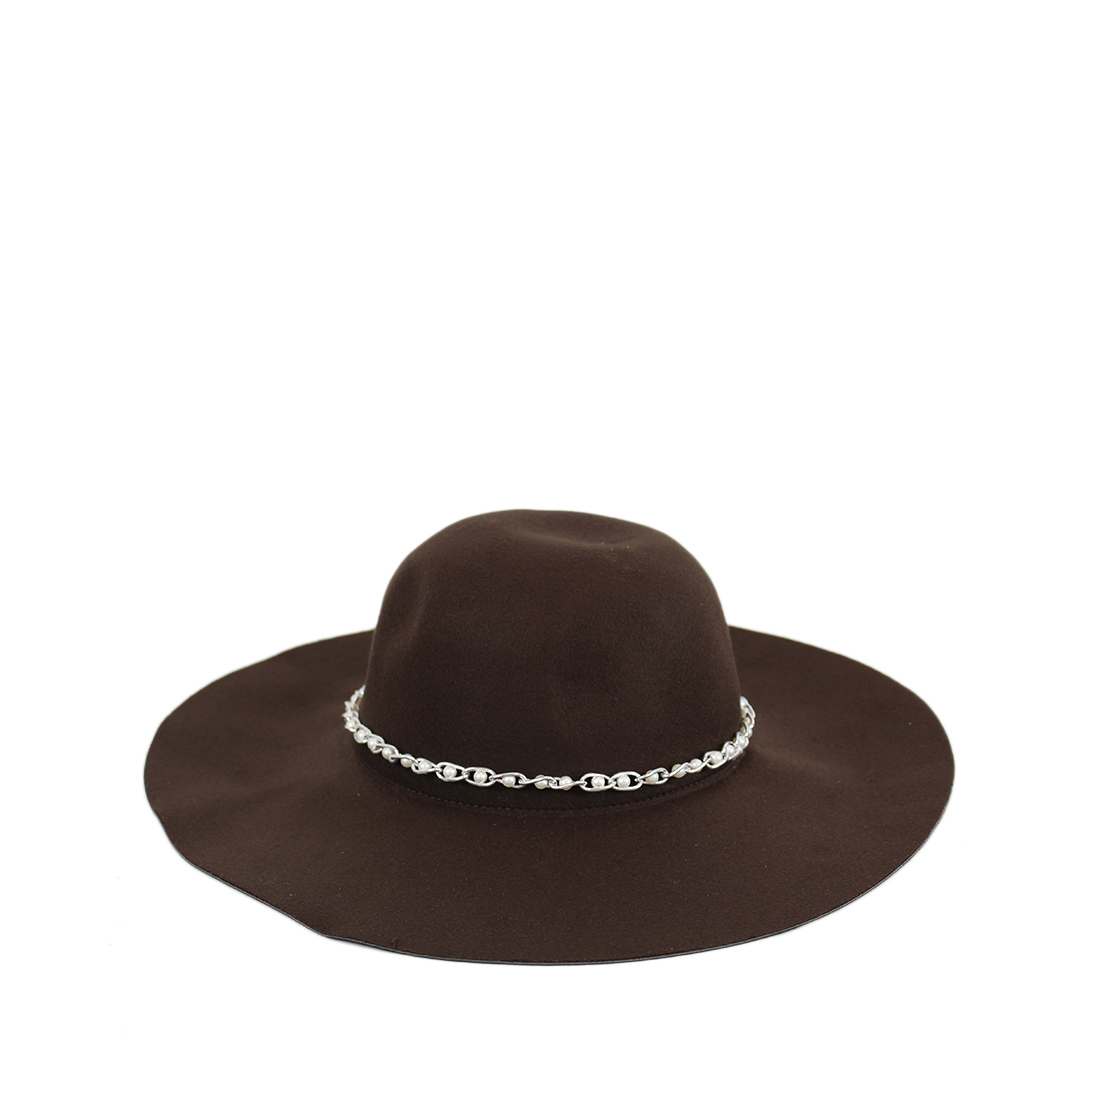 * Pearl Chain Detail Hat